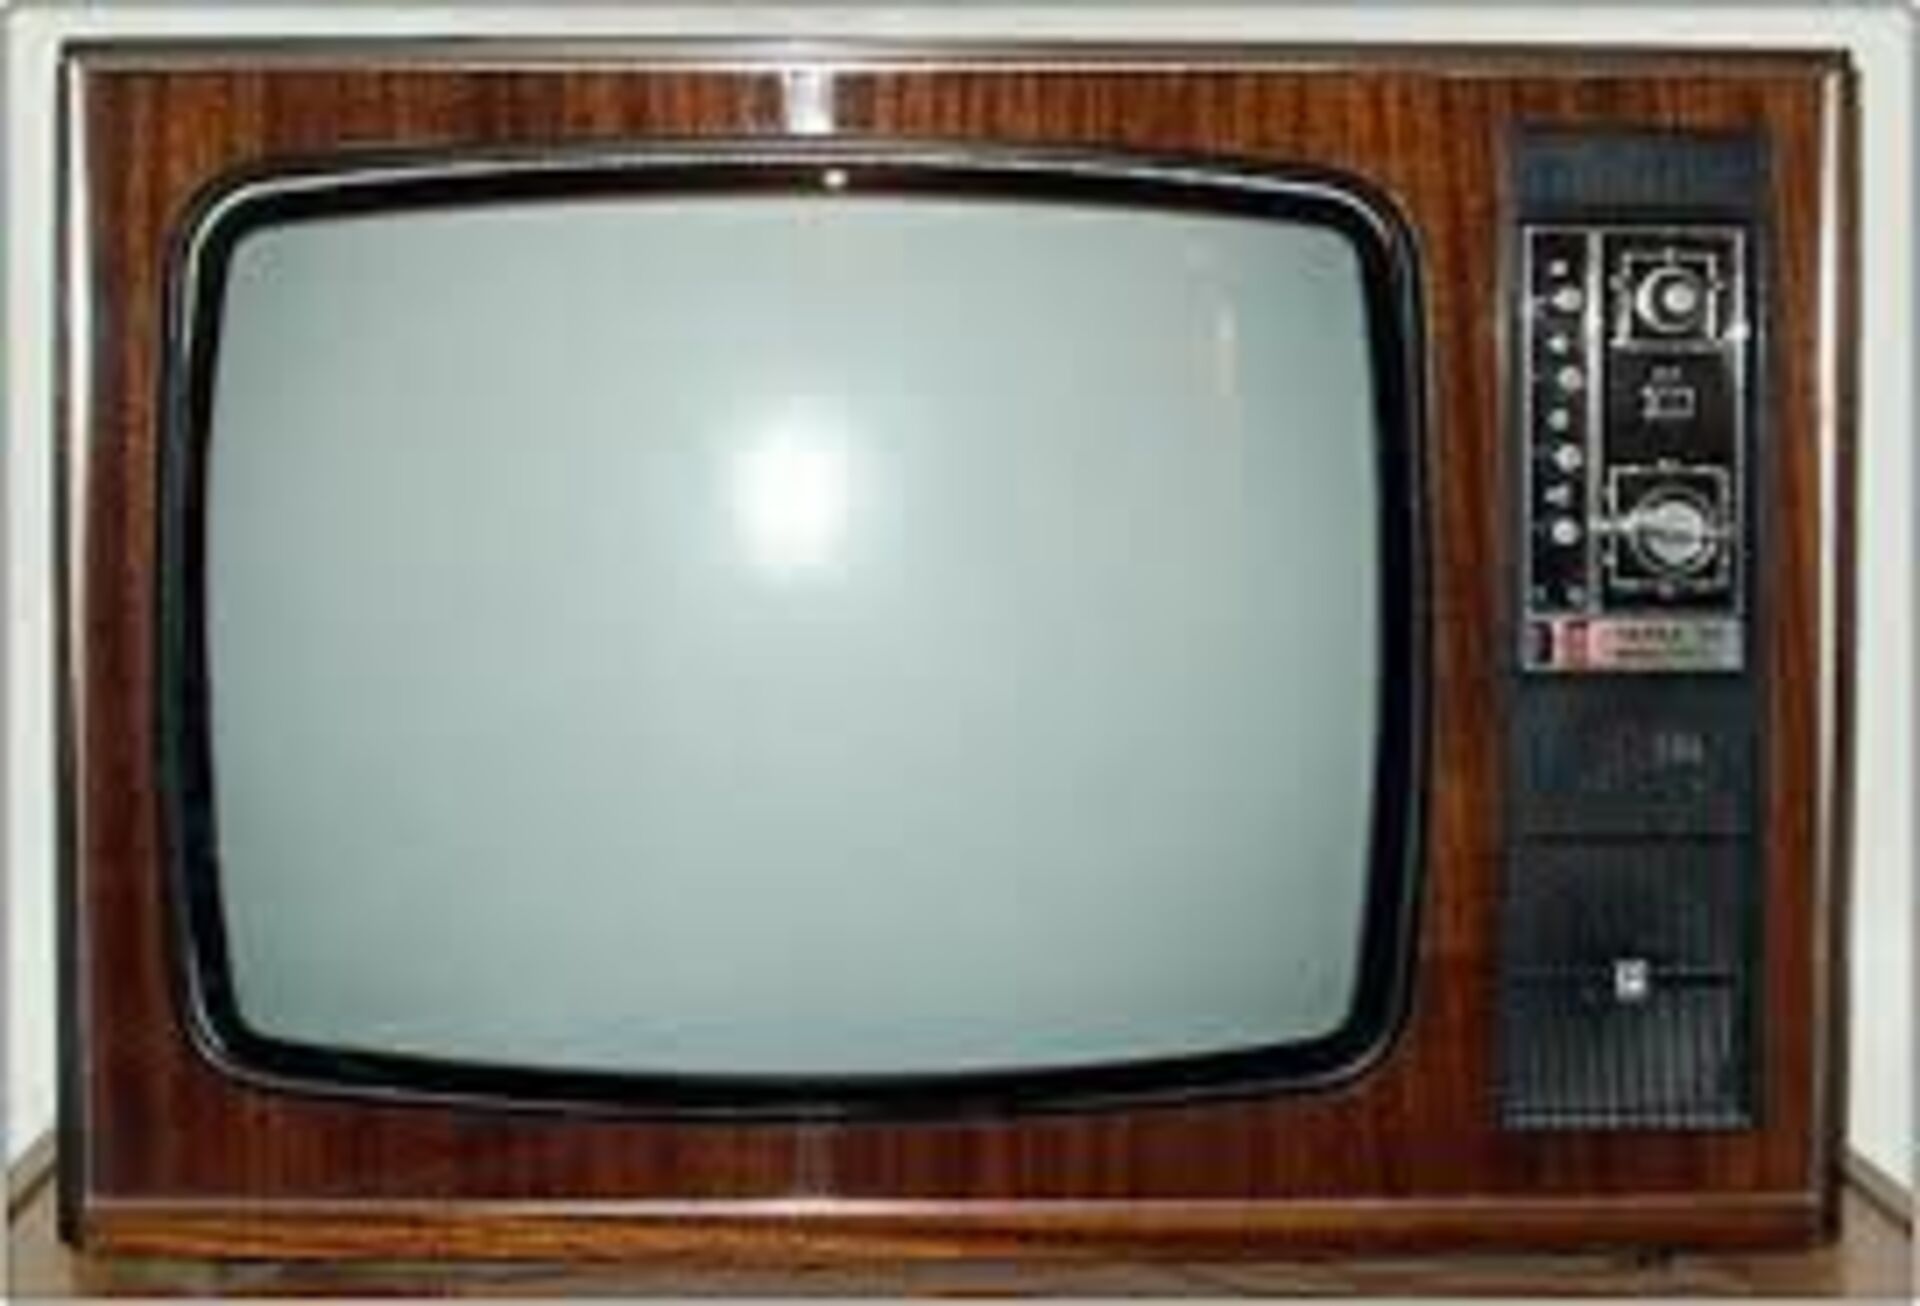 Телевизор советских времен. Чайка 701. Телевизор электрон 710. Телевизор Рубин 1970. Телевизор Горизонт 701.